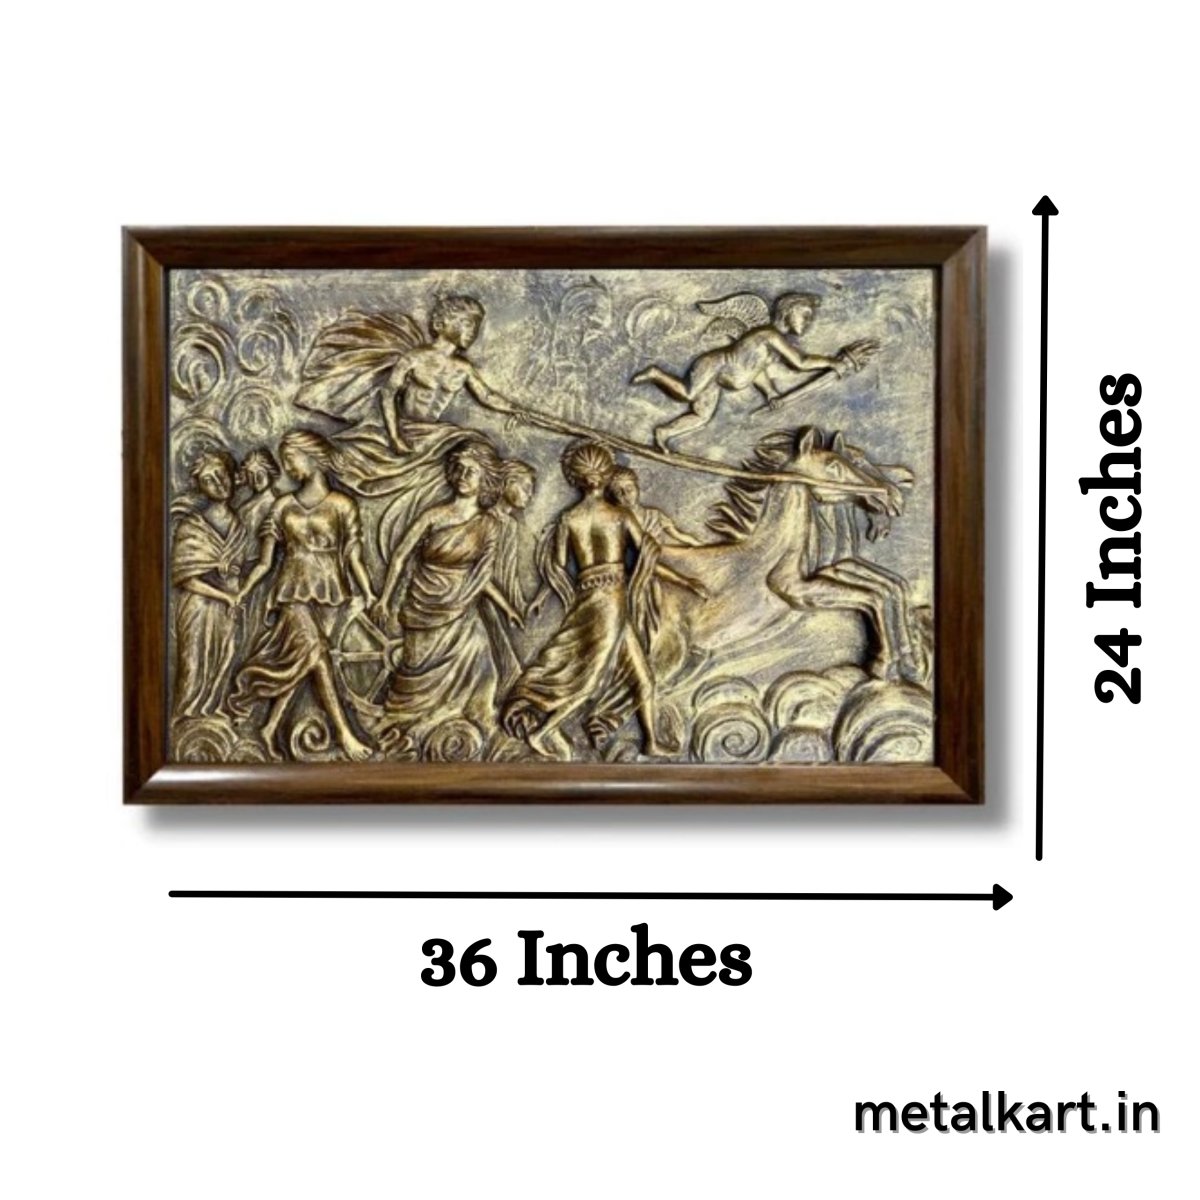 L'AURORA Classic Roman 3D Wall Hanging (36 x 24 Inches)